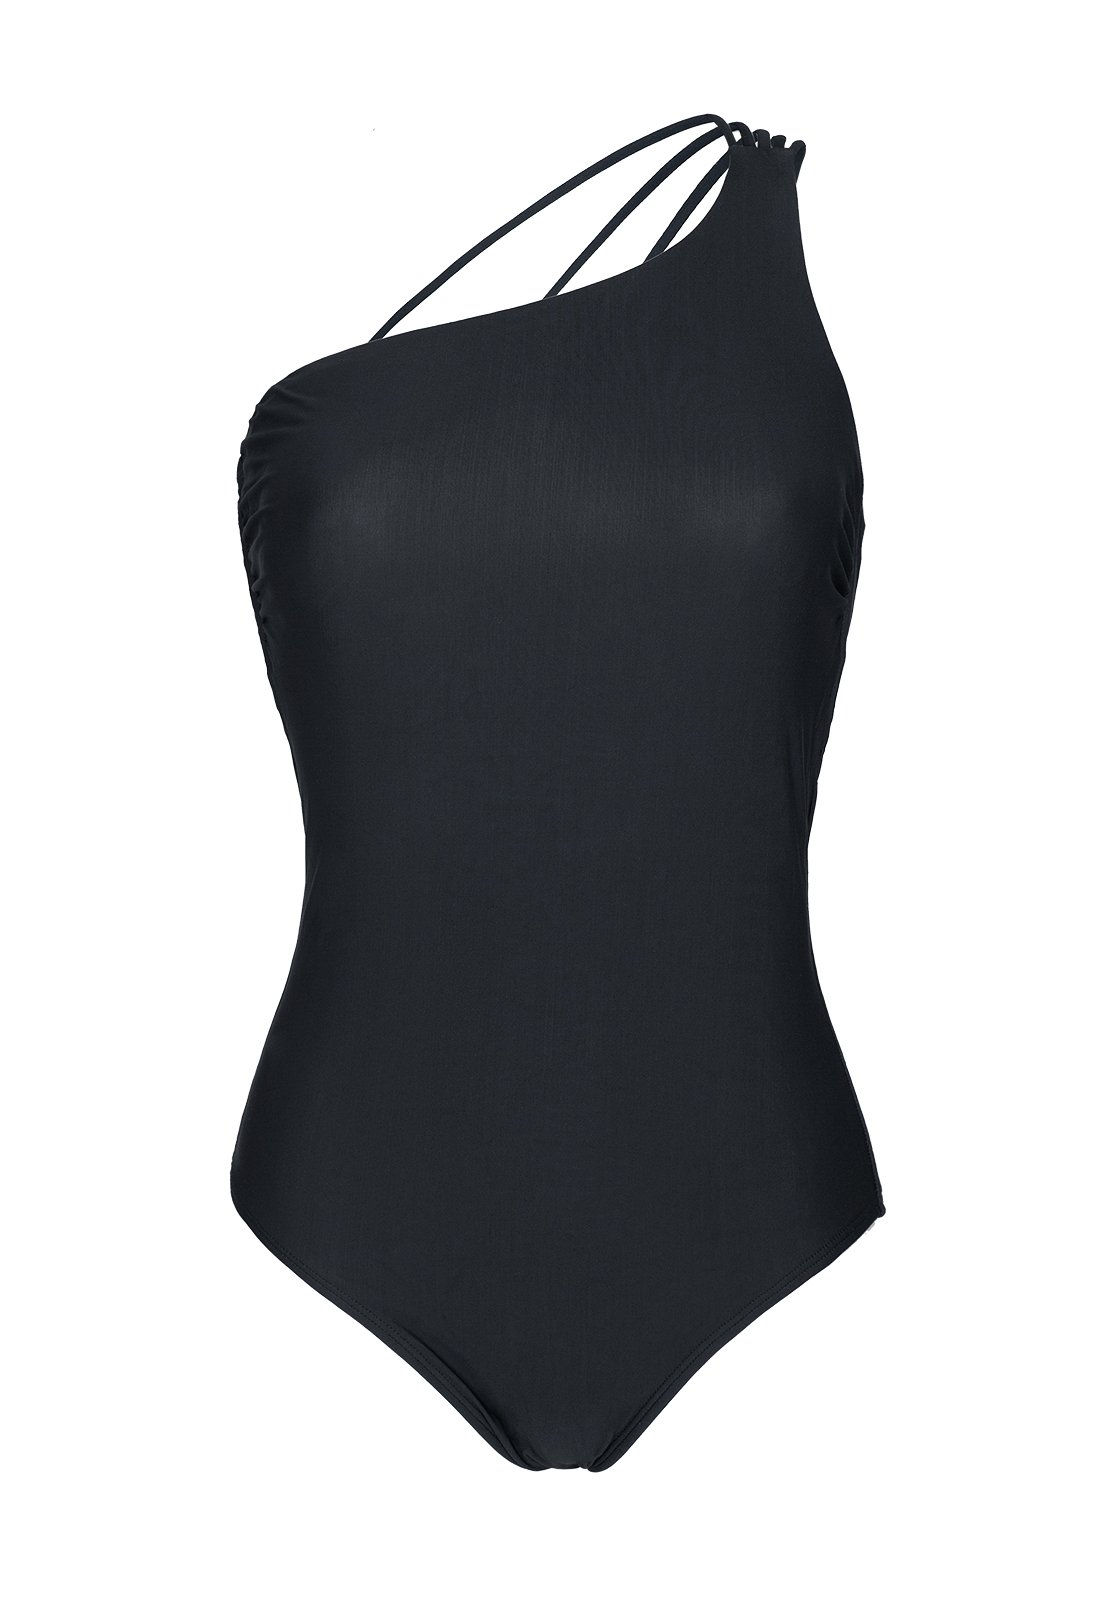 Black Asymmetric One-piece Swimsuit With Original Back - New Black